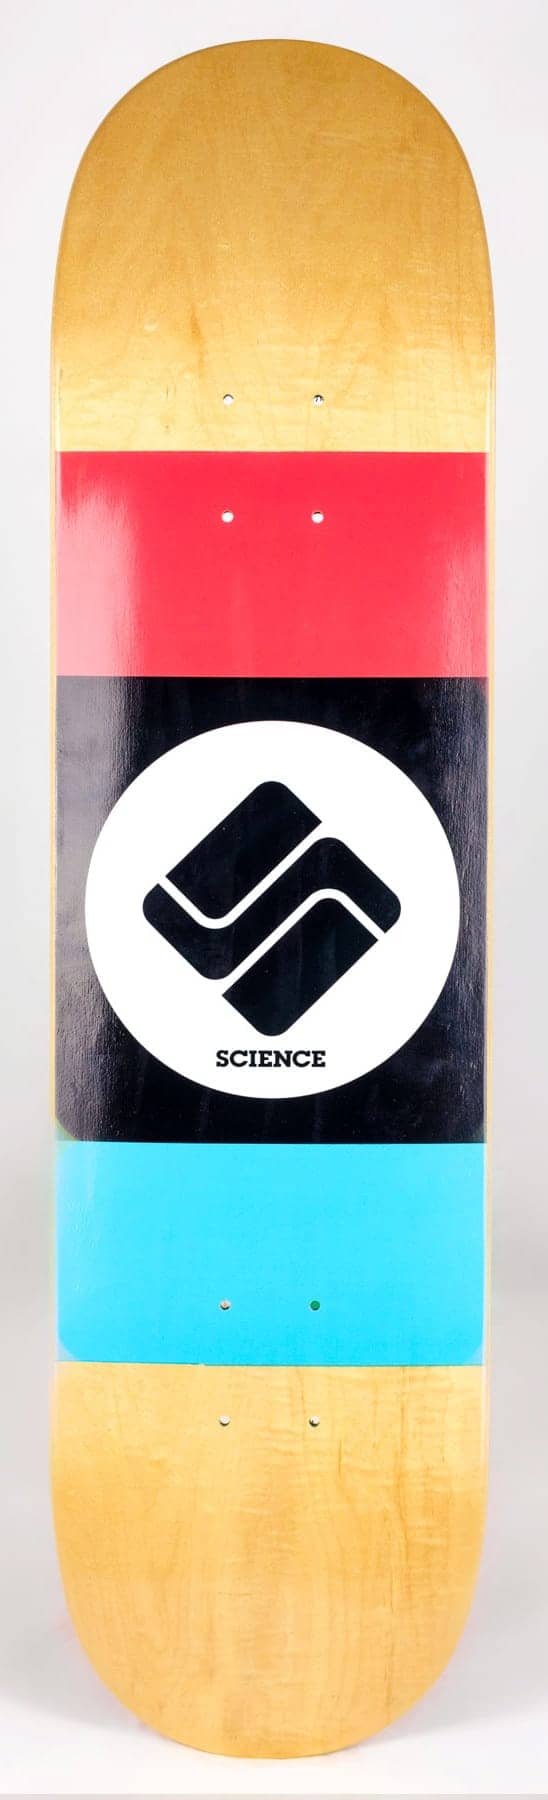 chris morgan science logo skateboard design